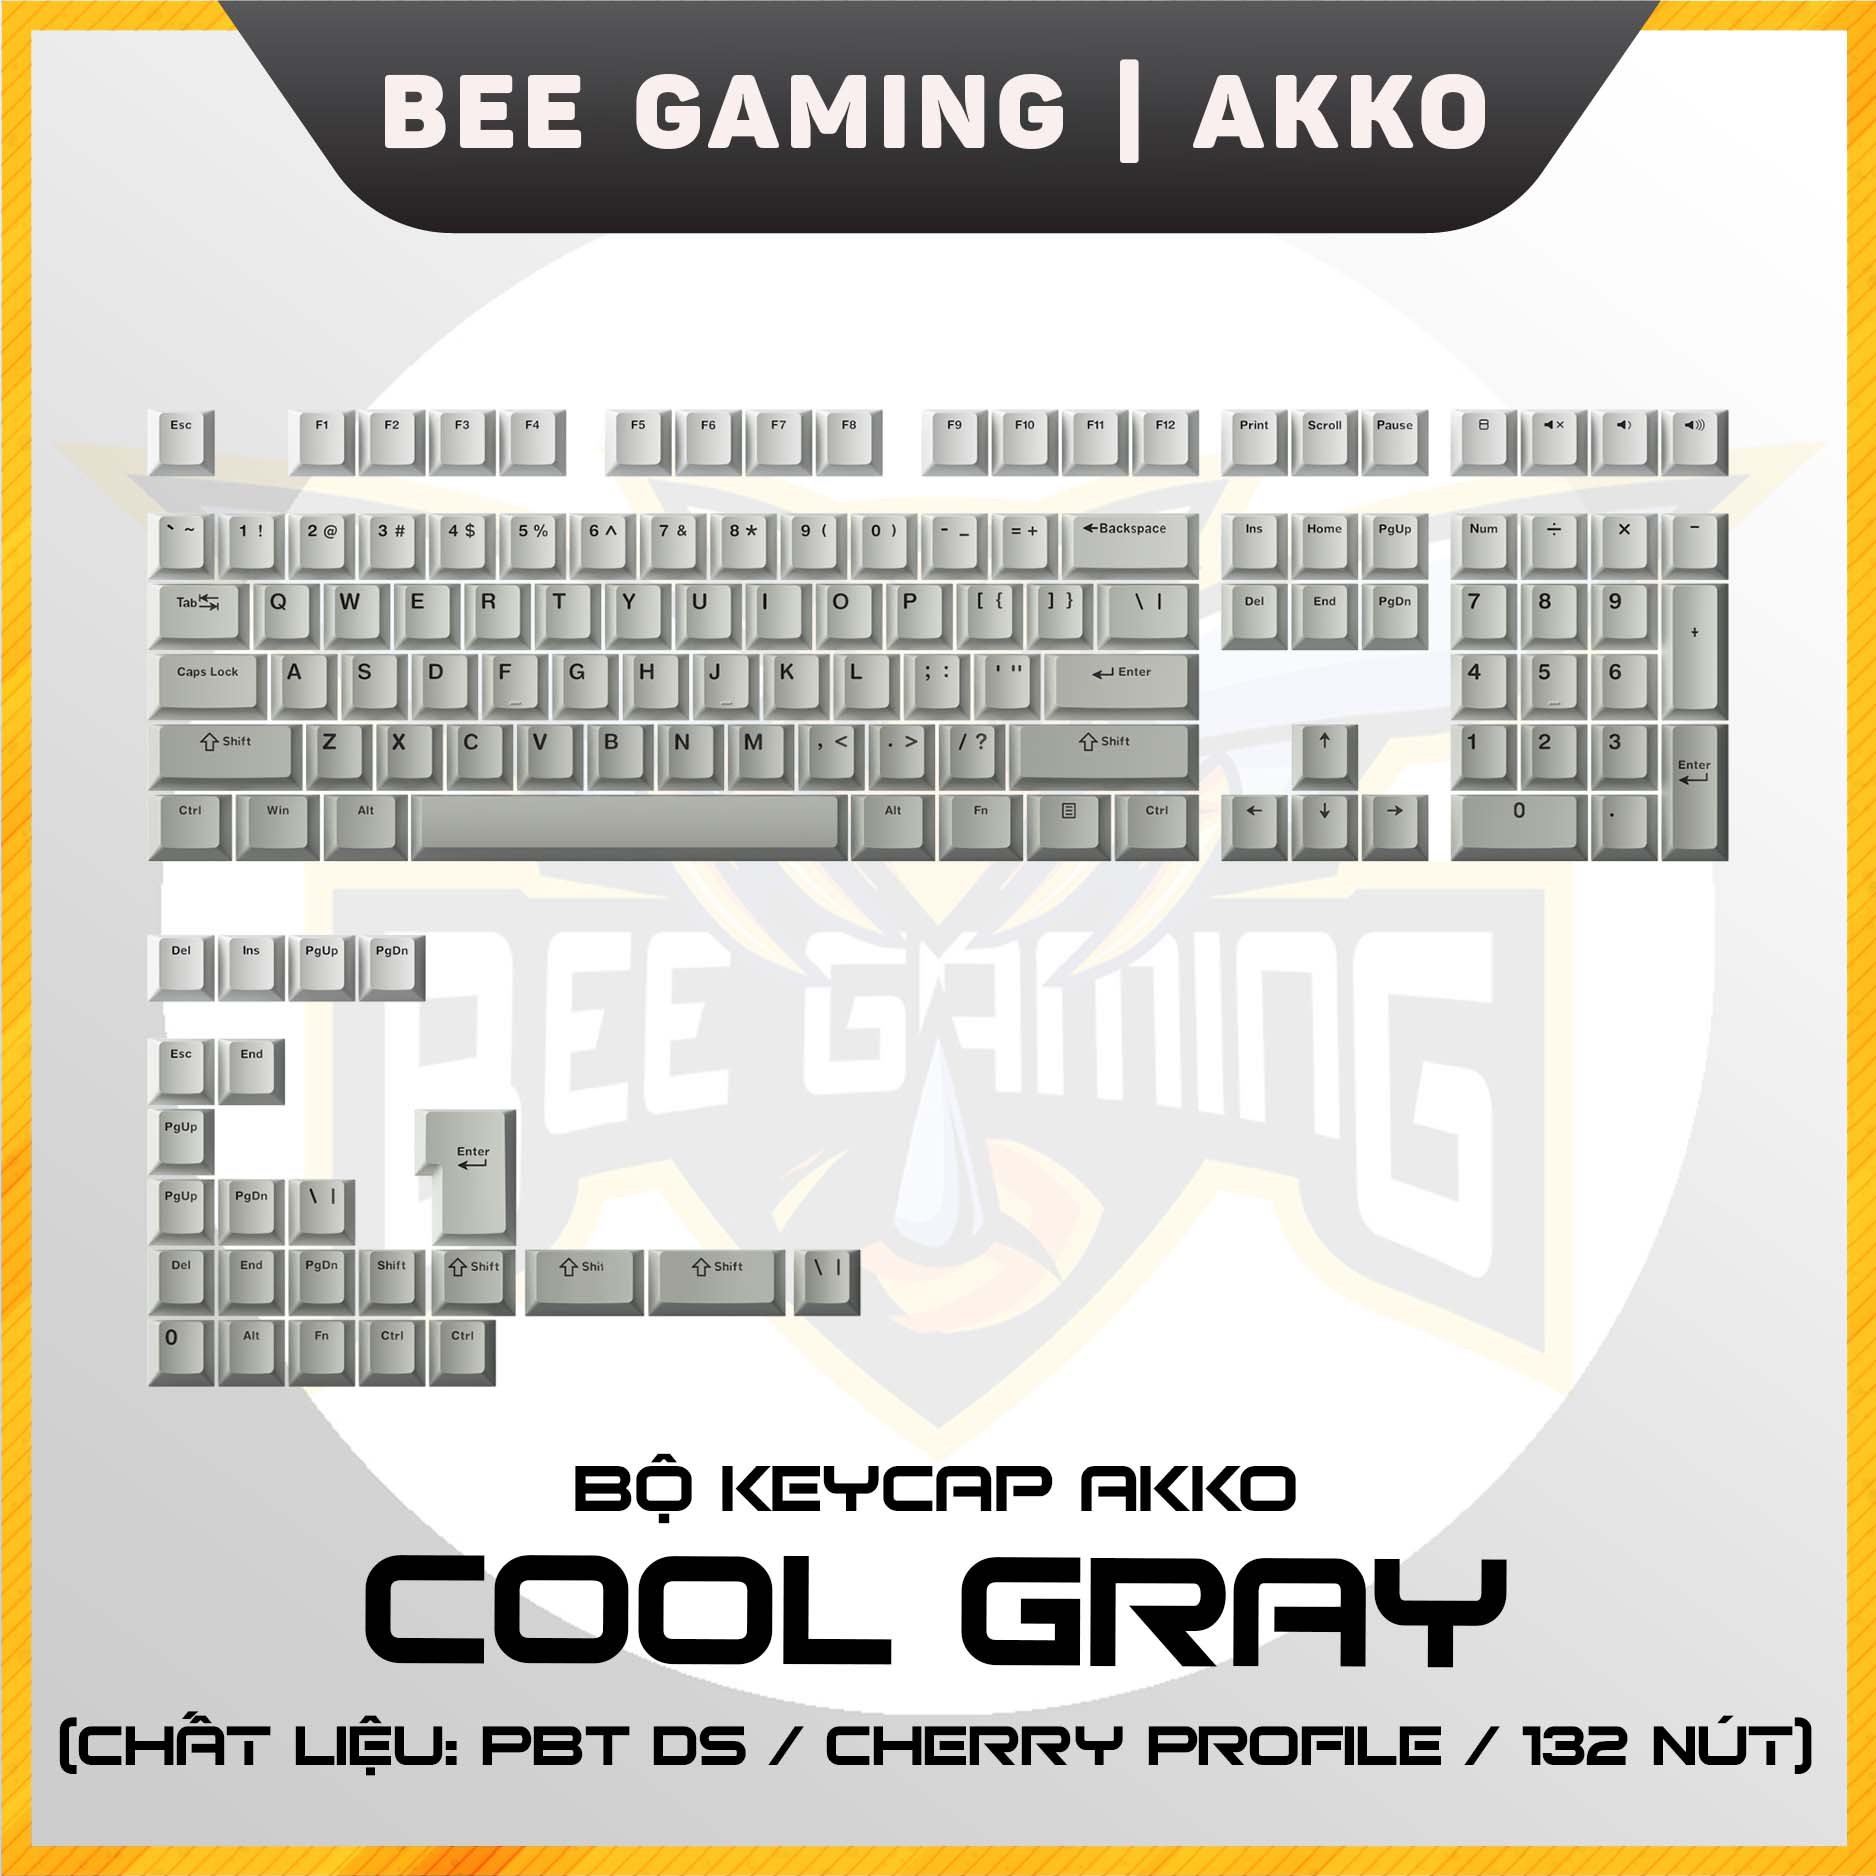 bo-keycap-akko-cool-gray-cherry-profile-beegaming-1